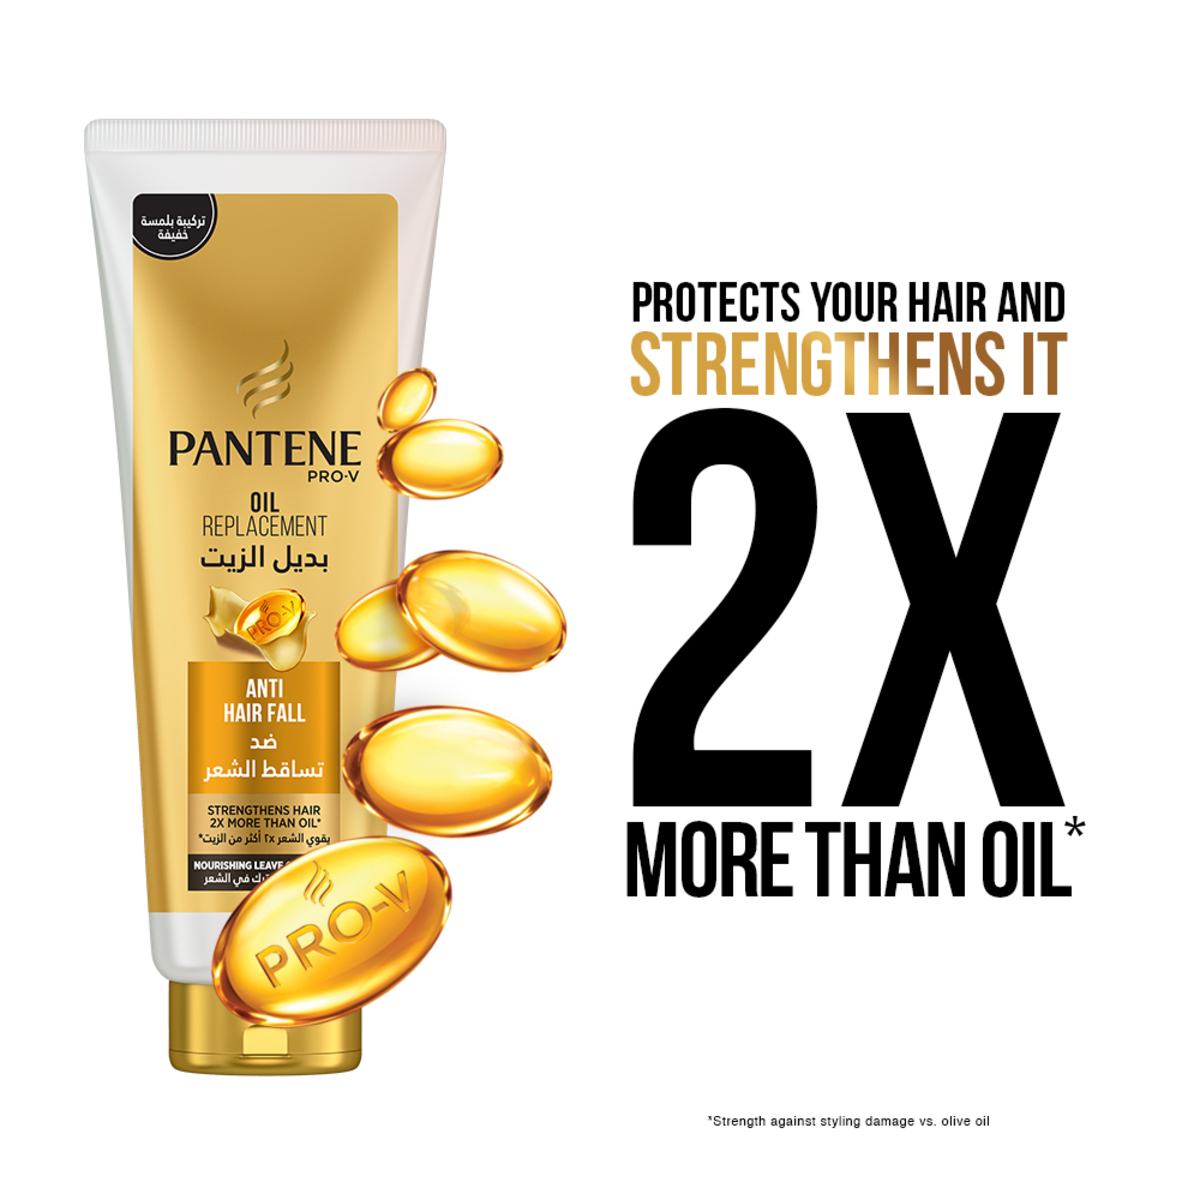 Pantene Pro-V Anti-Hair Fall Oil Replacement